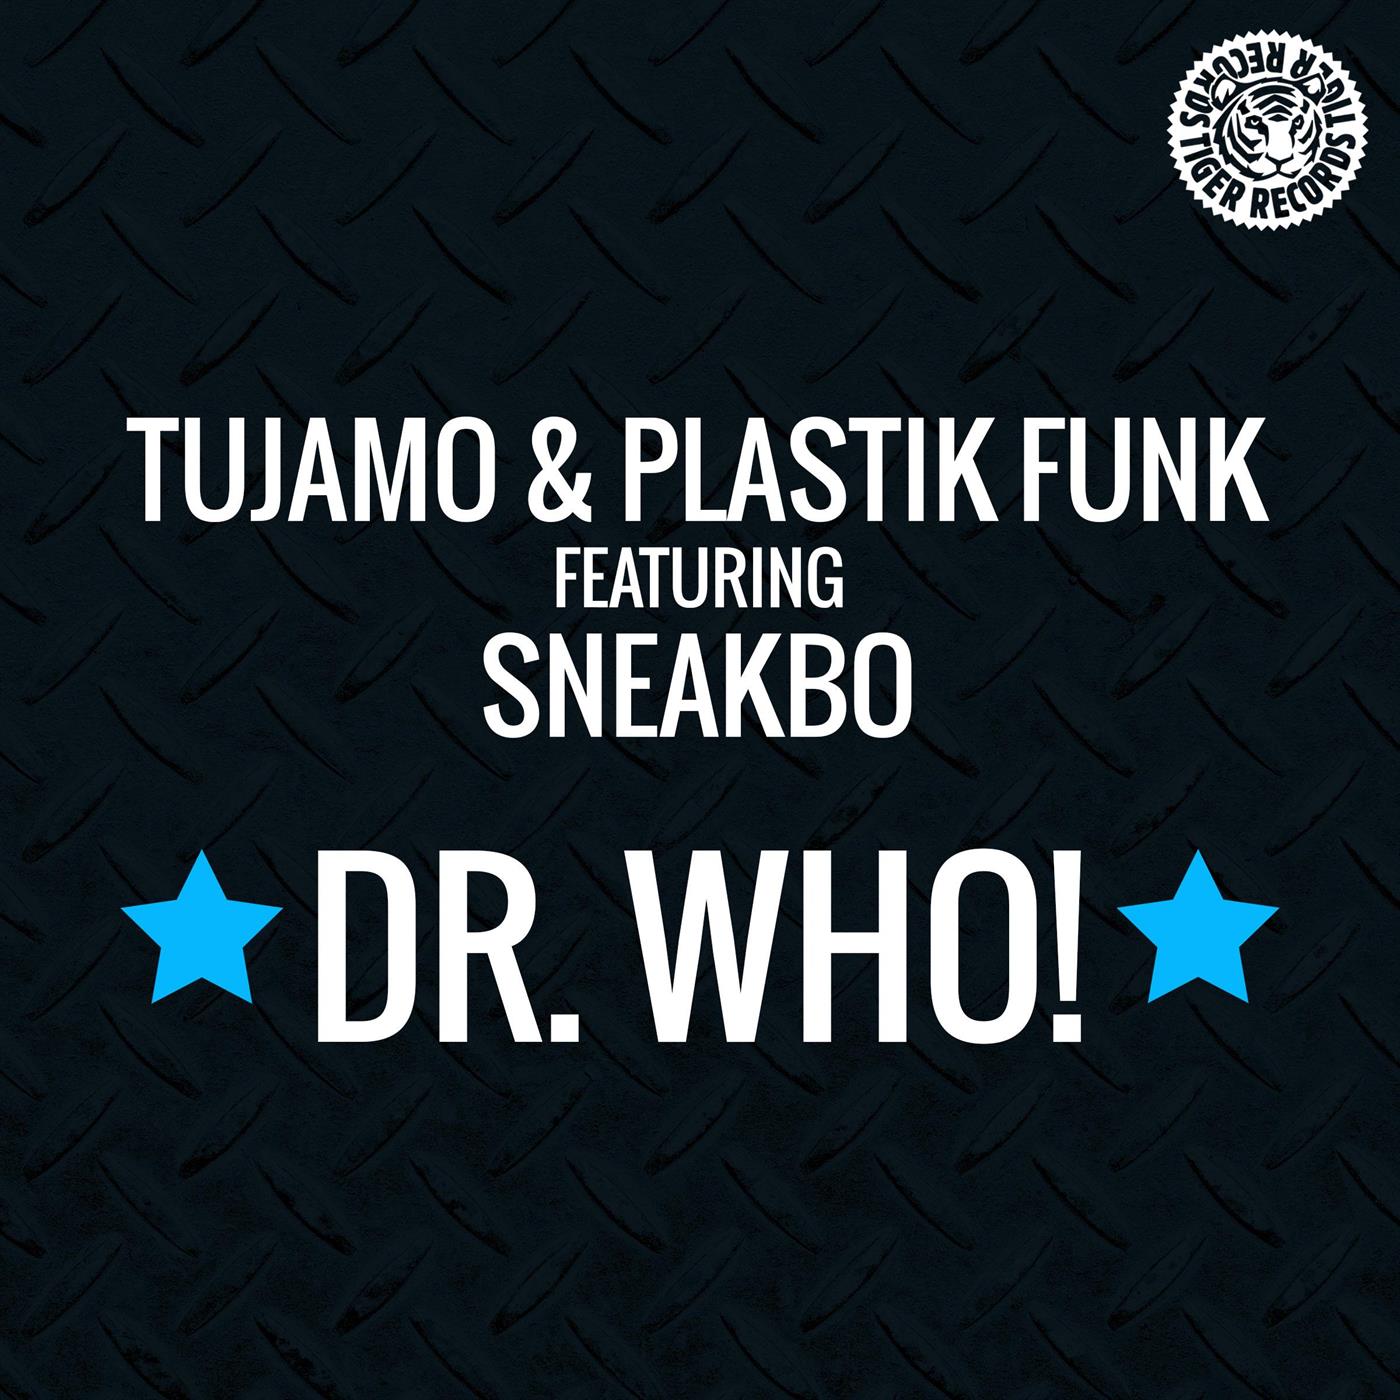 Dr. Who! (Futuristic Polar Bears Remix)